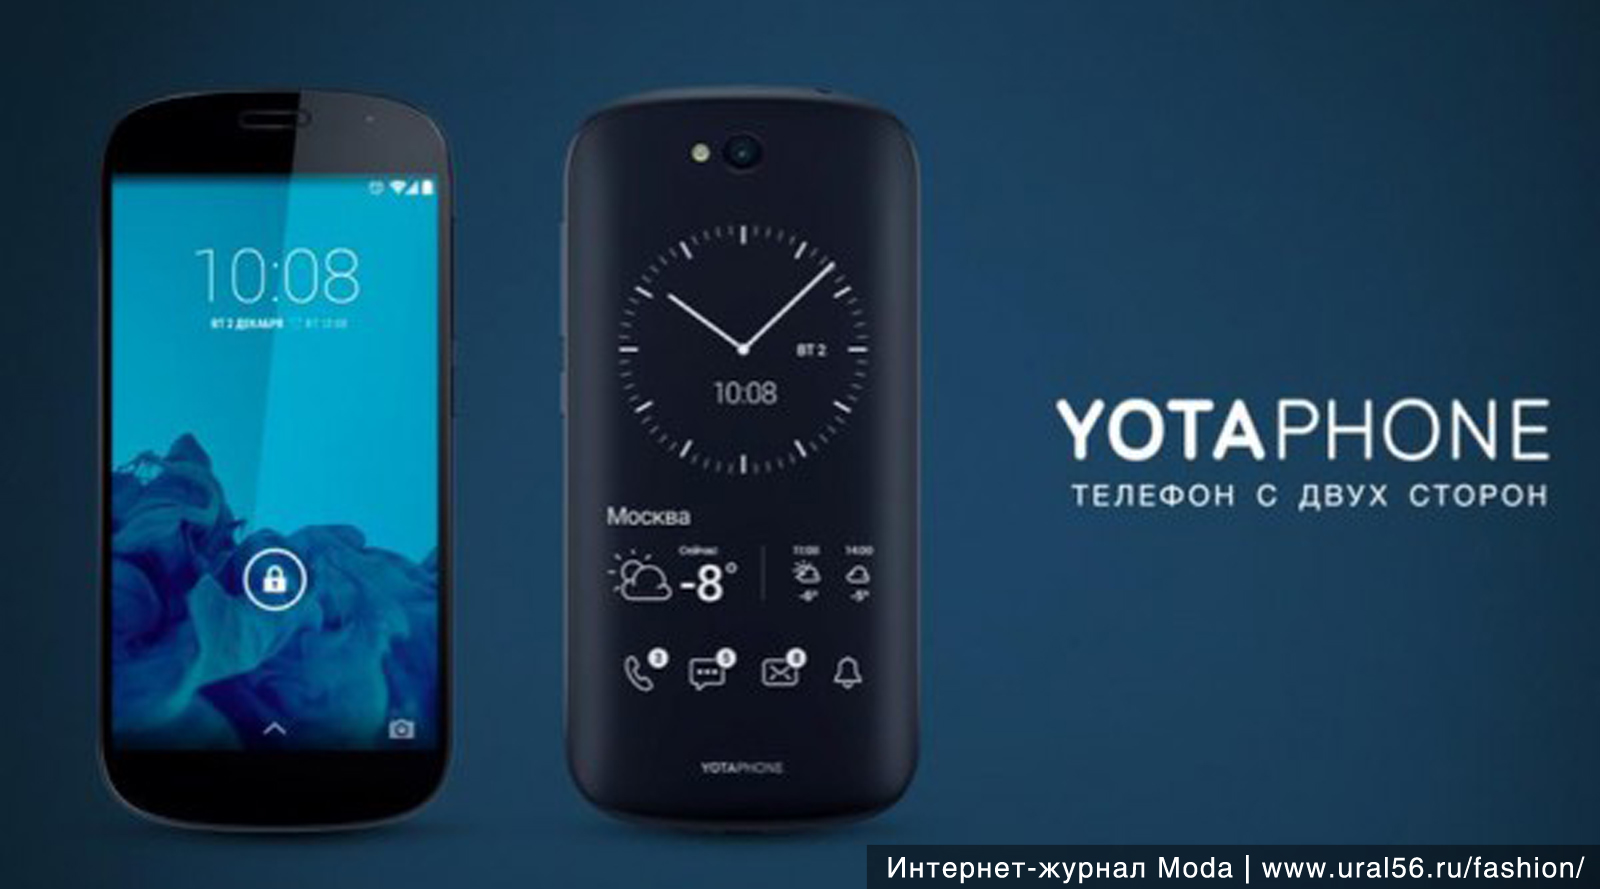 Российский телефон название. Йотафон 2. Yota телефон с 2 экранами. YOTAPHONE 1. Российский смартфон YOTAPHONE.